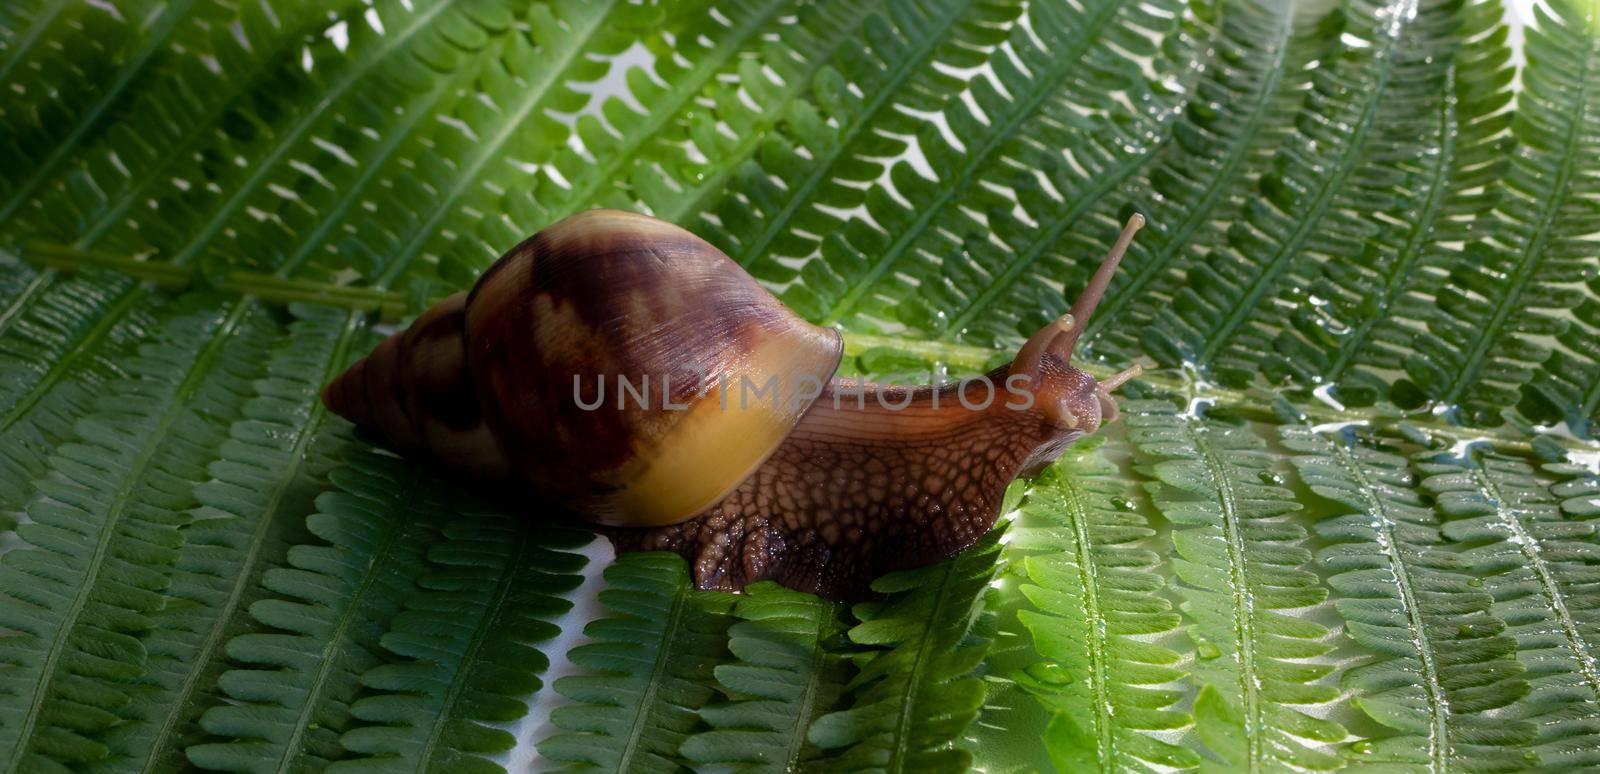 Achatina fulica, a giant snail crawling on a green fern leaf.